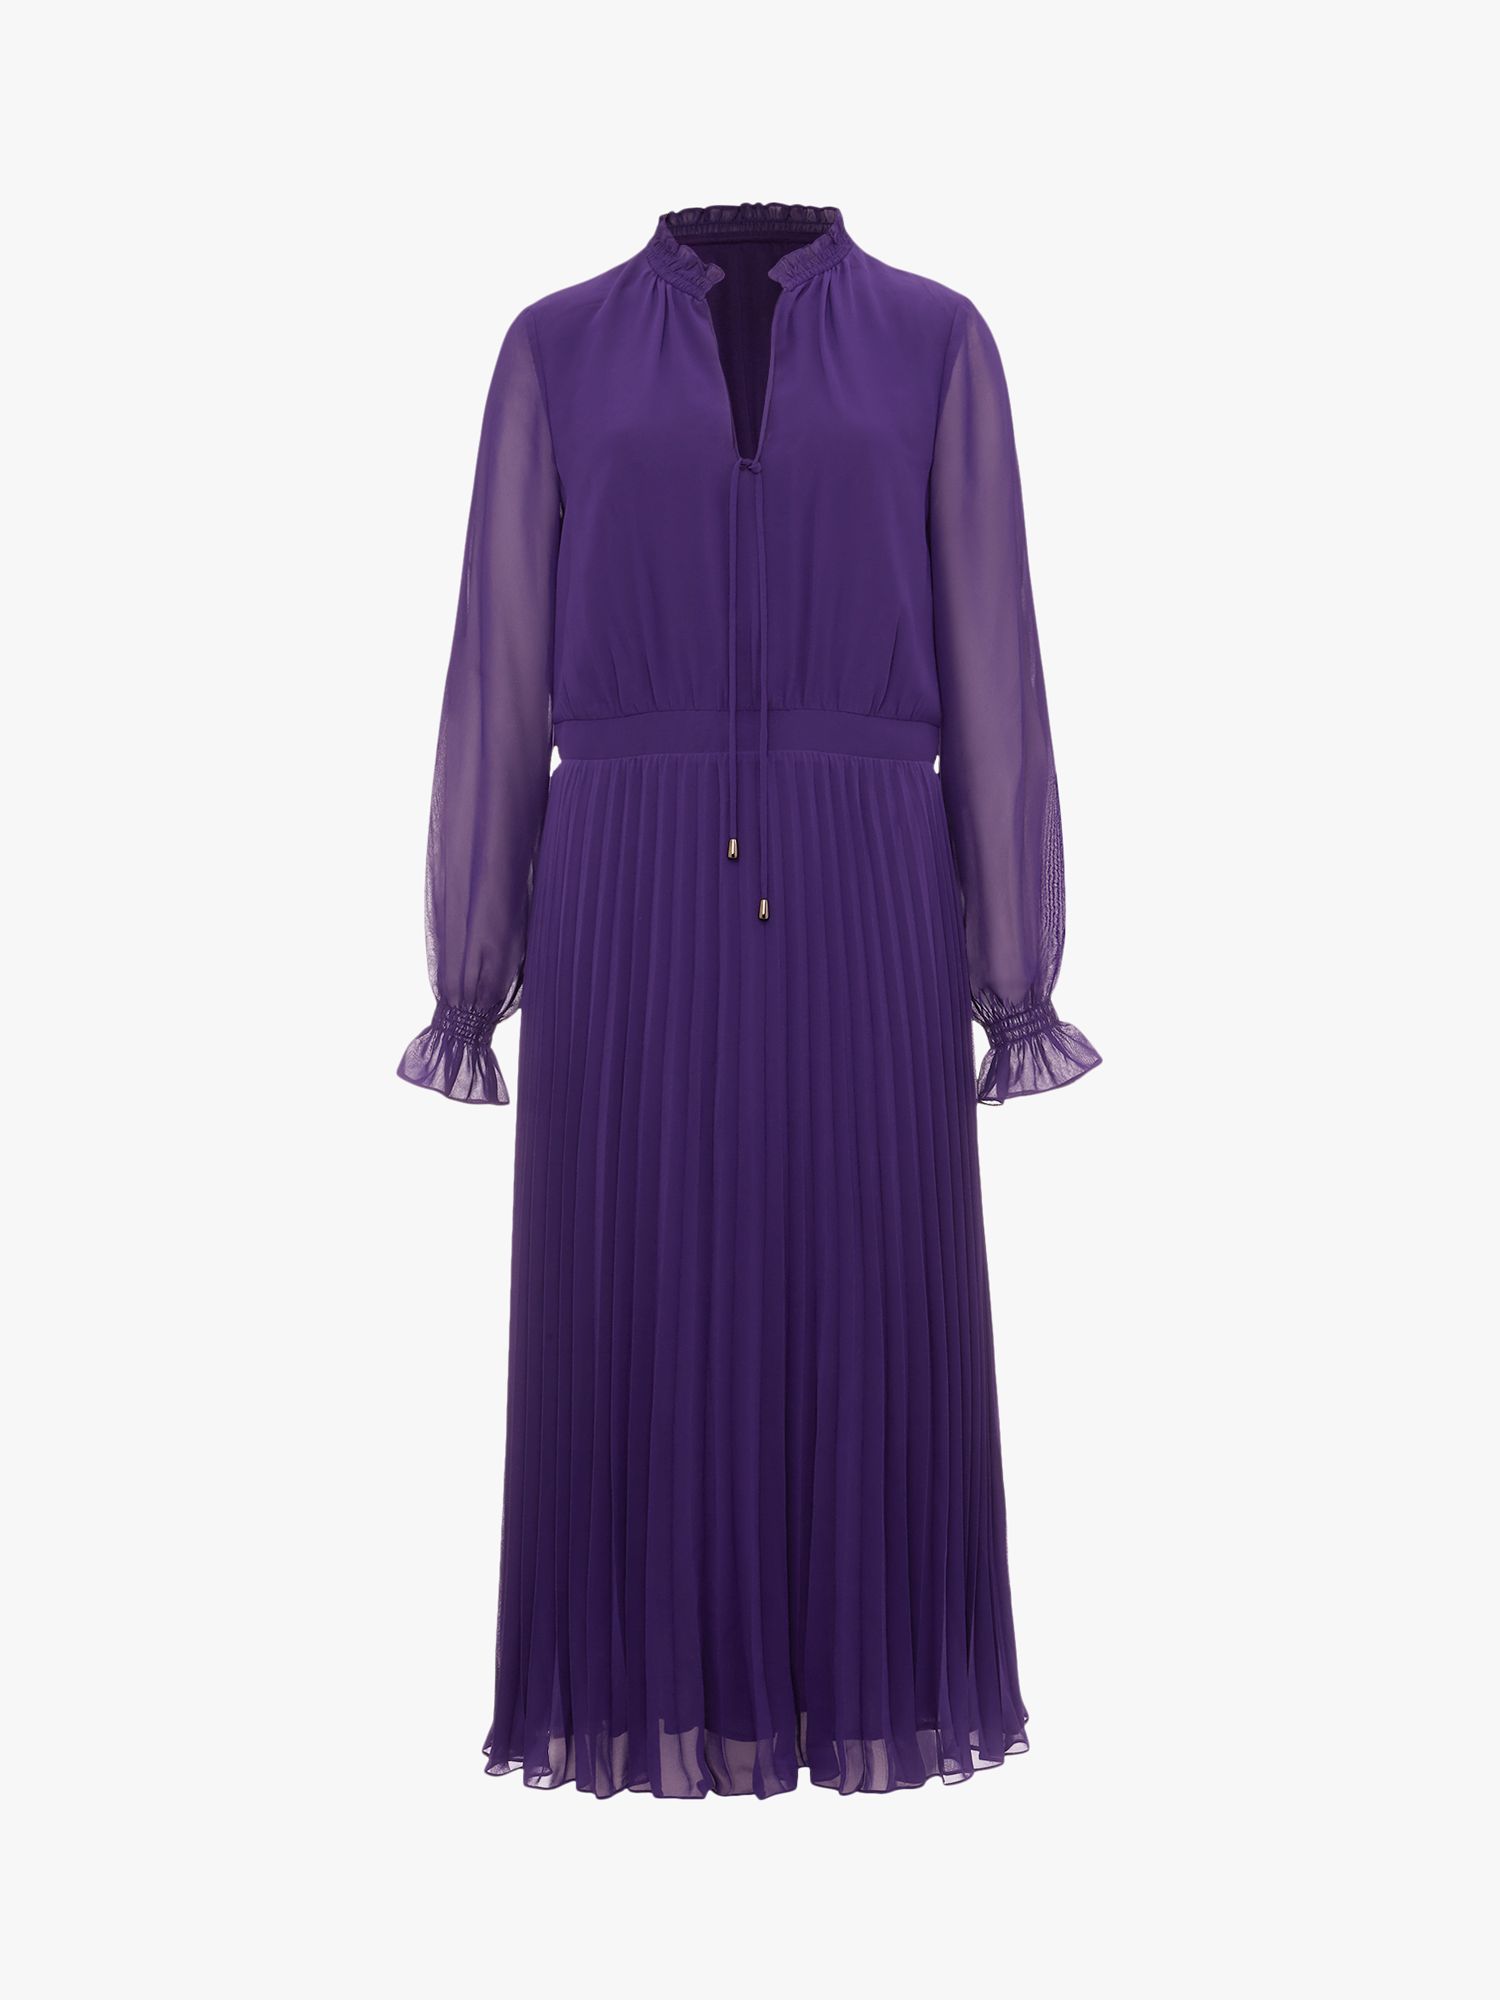 Phase Eight Iris Pleat Dress, Electric Purple